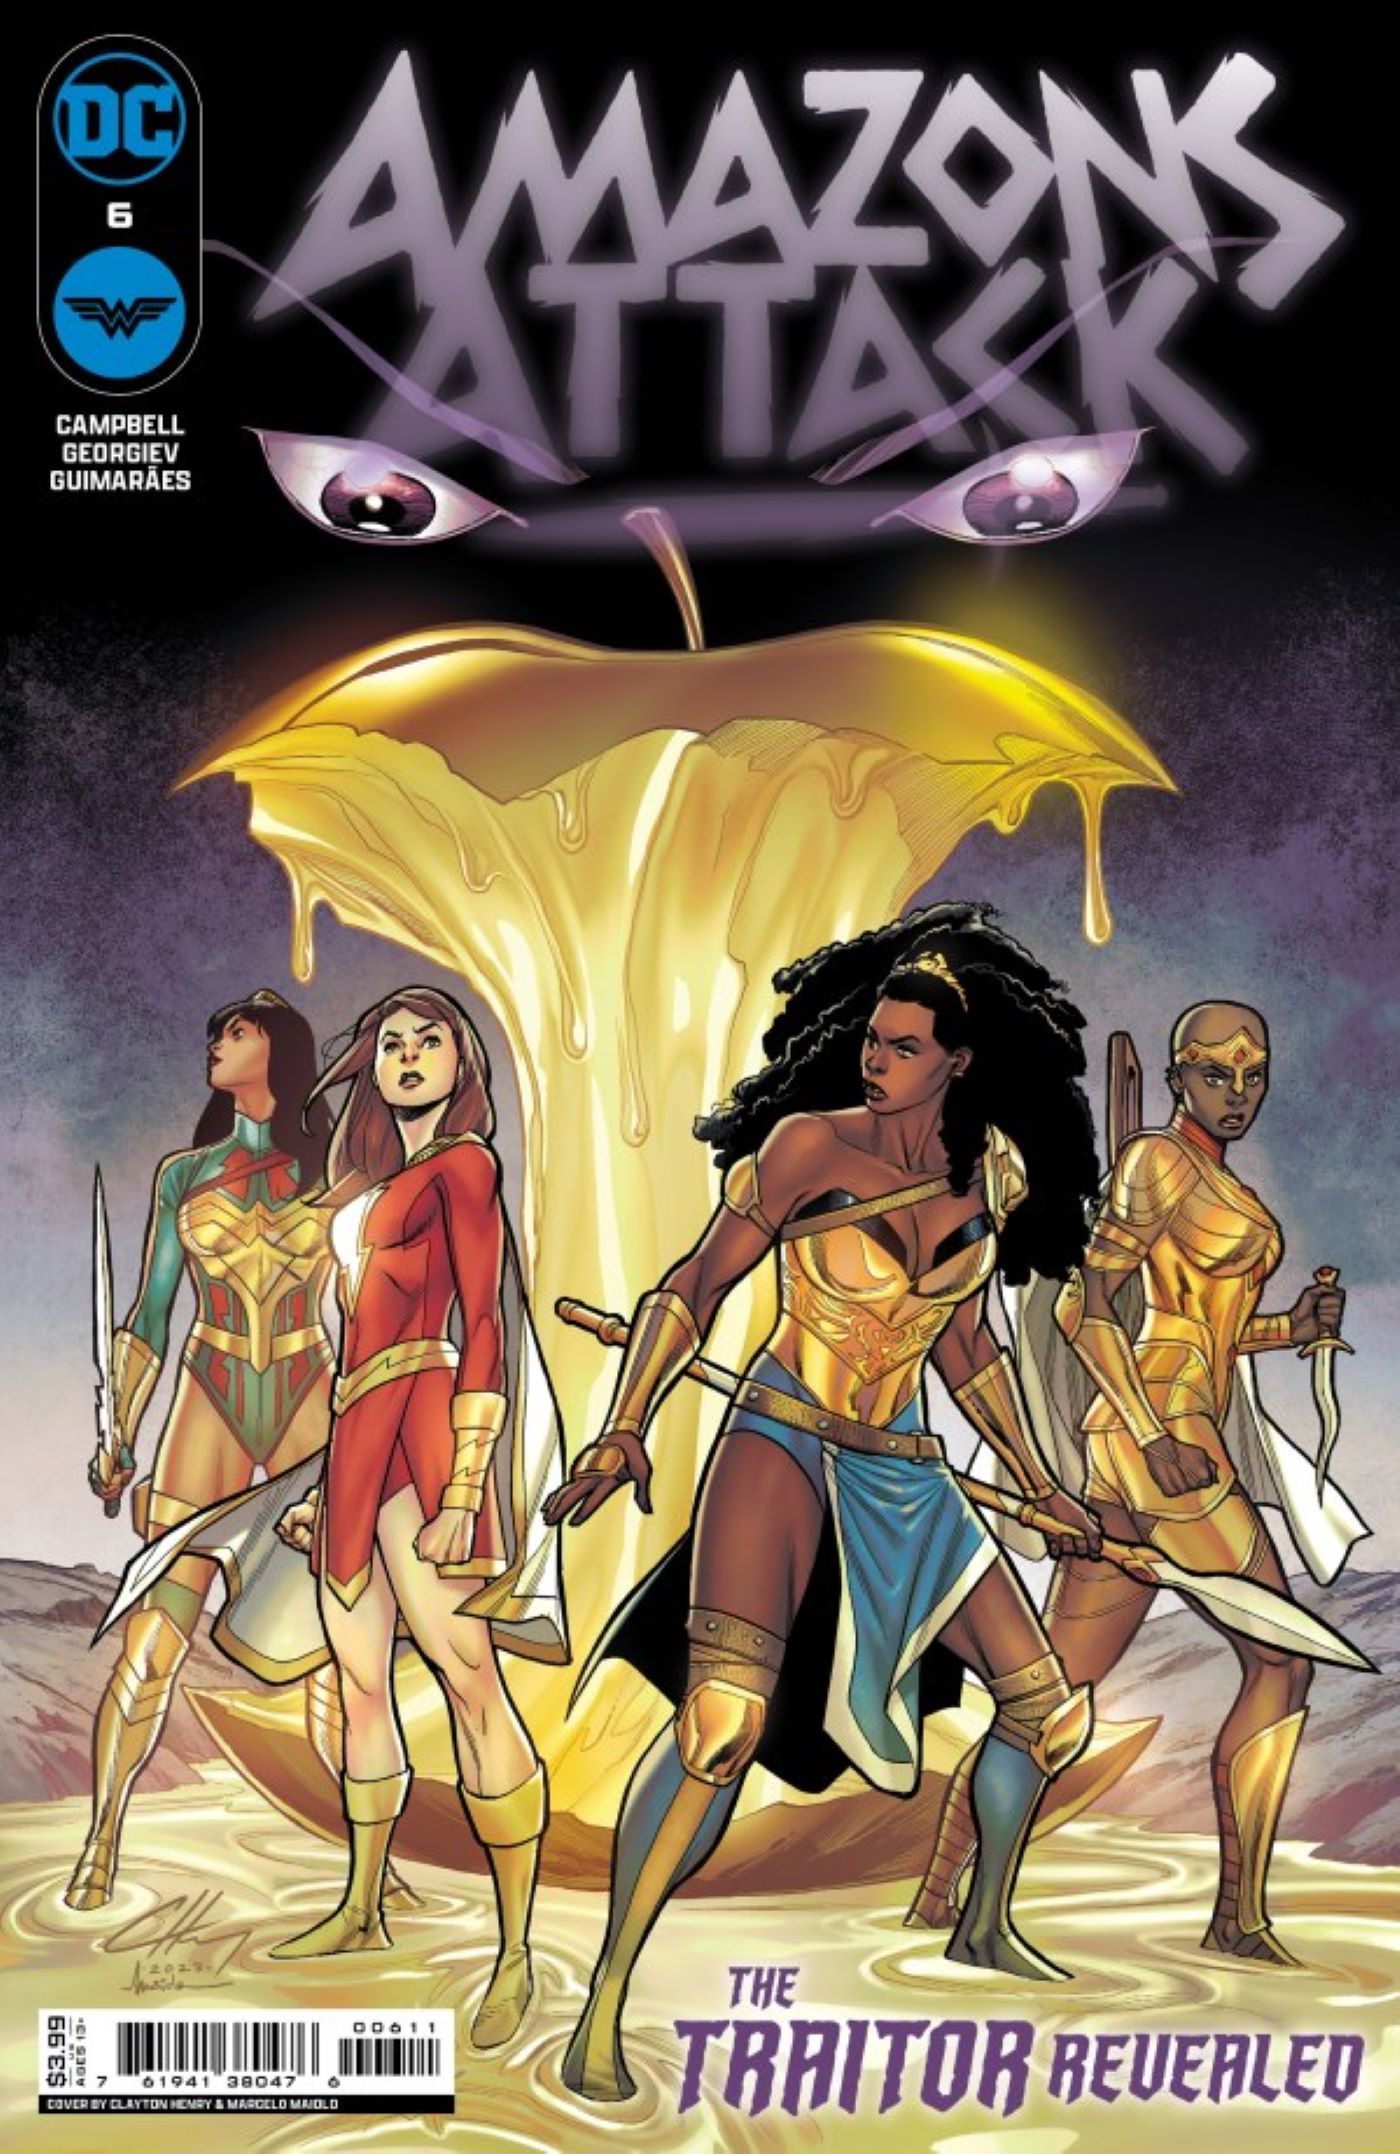 Capa do Amazons Attack #6 com Nubia, Mary Marvy, Wonder Girl Yara Flor